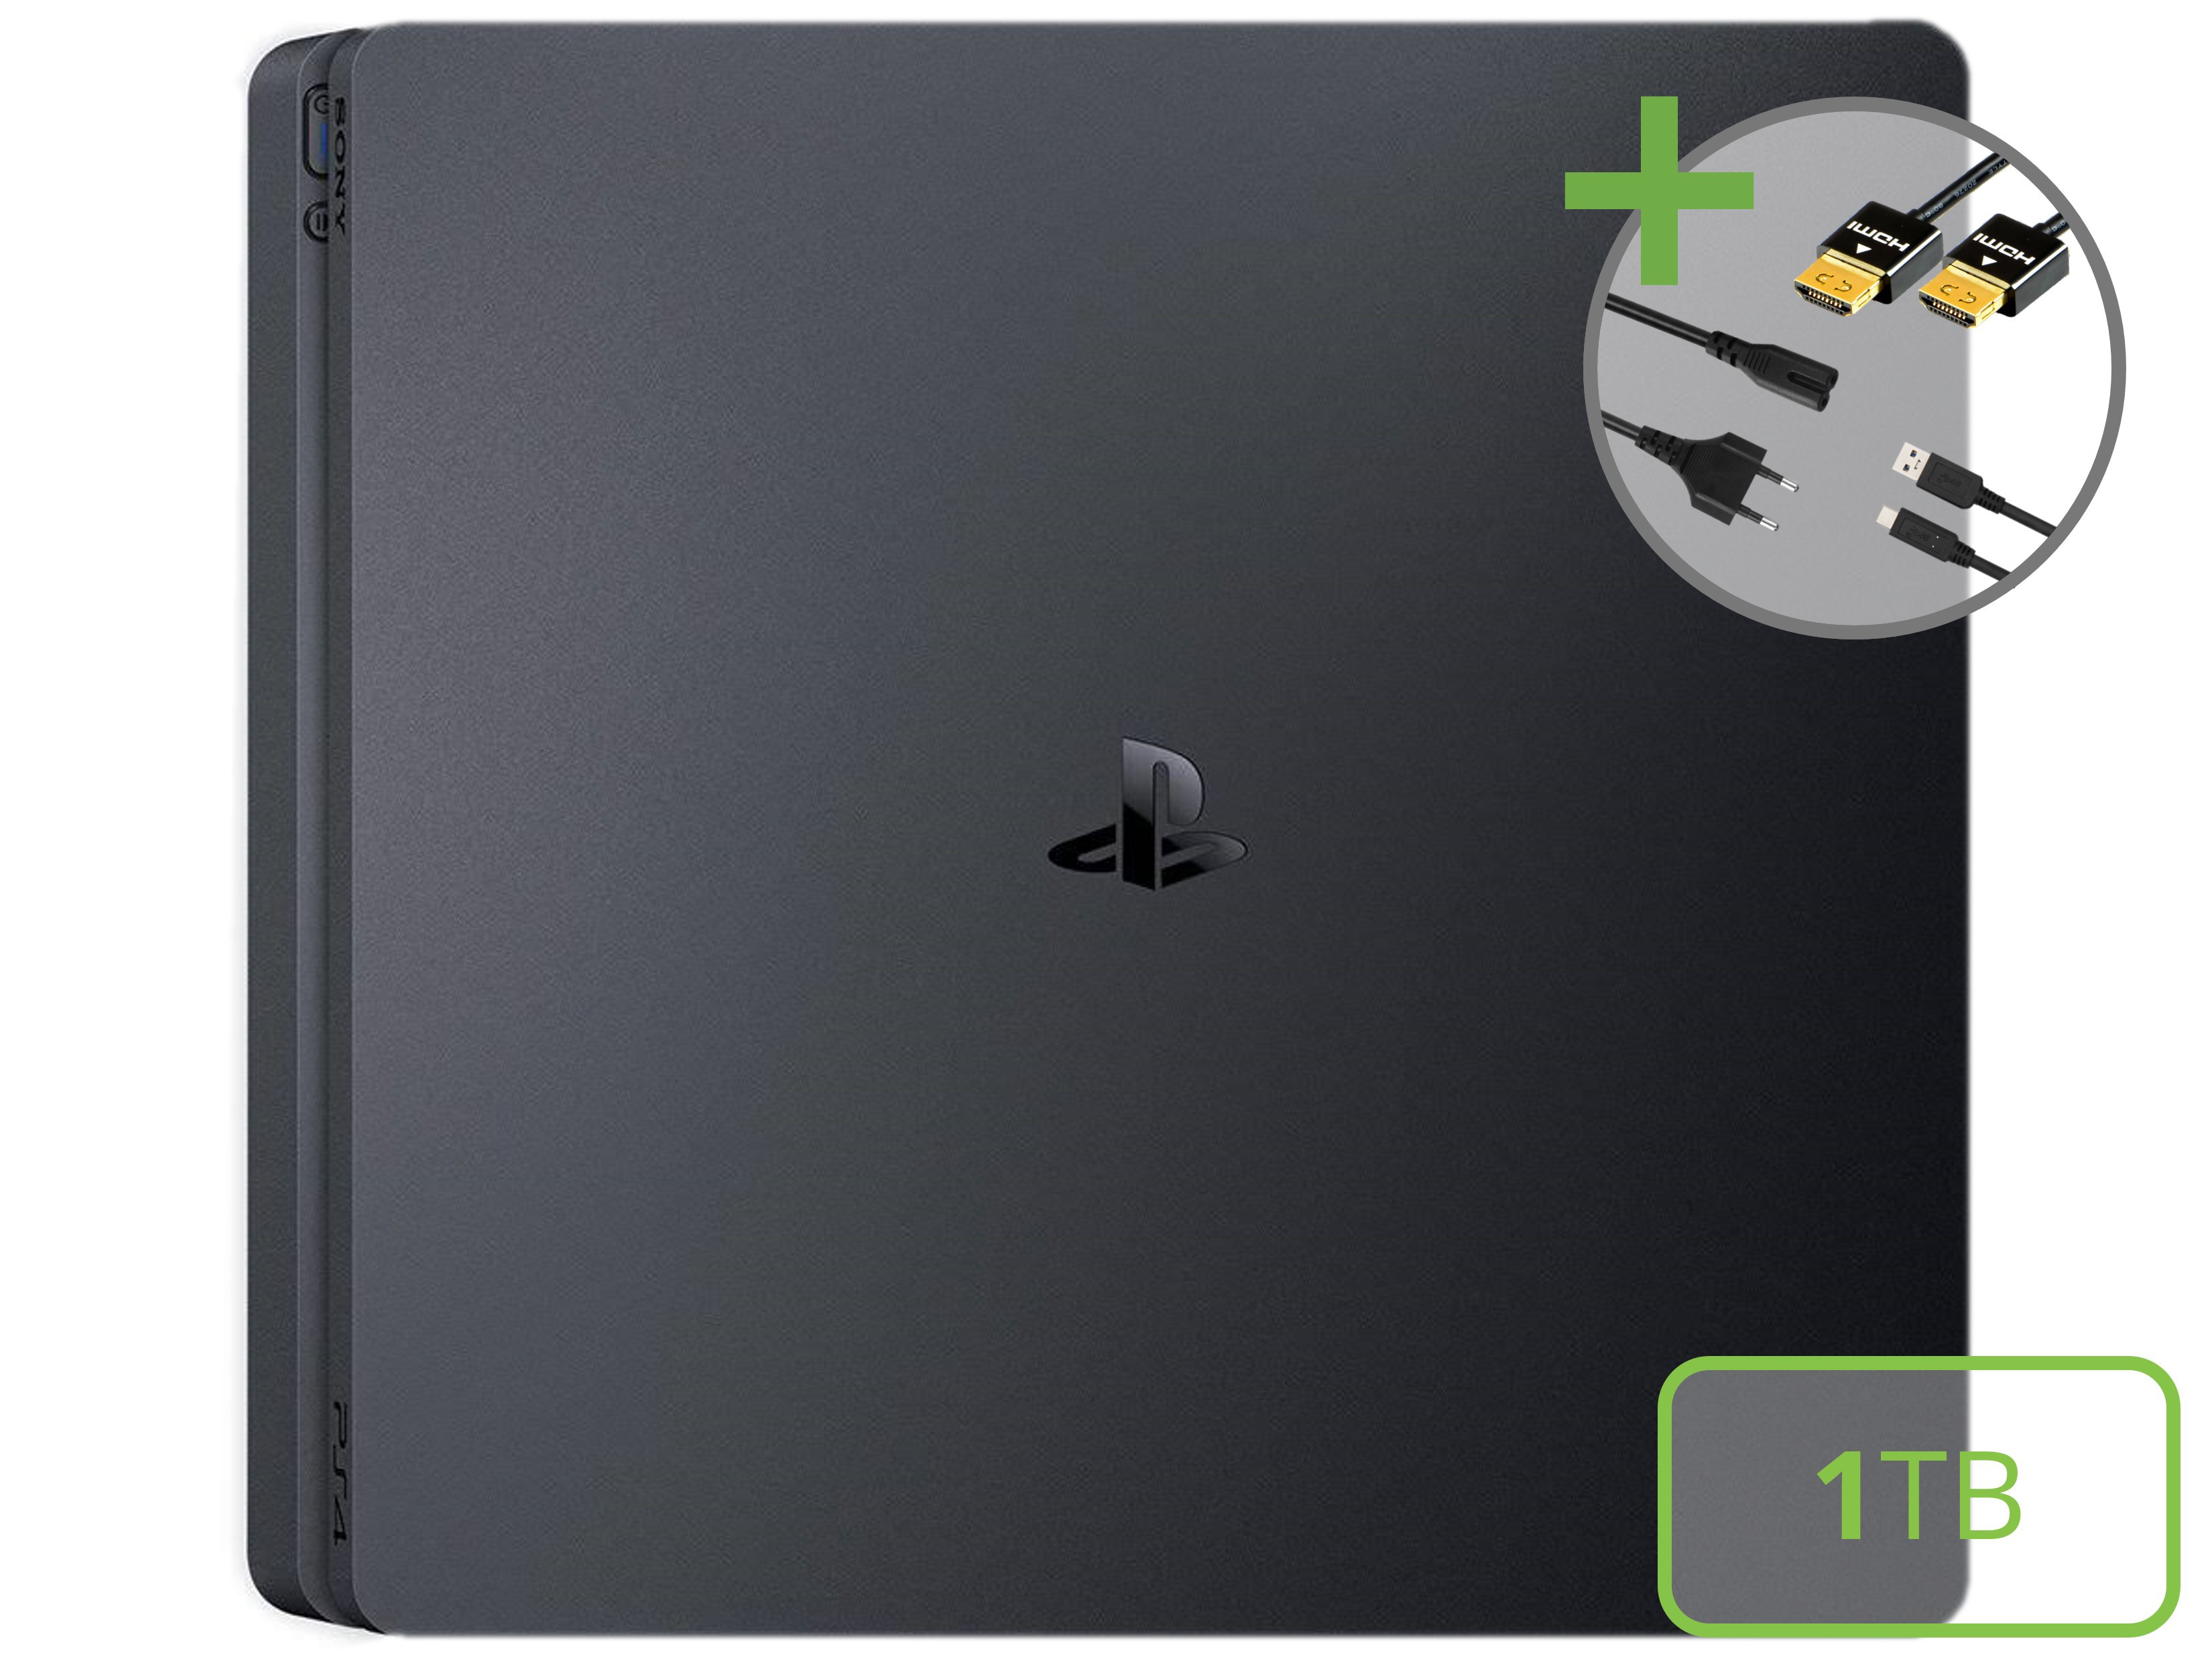 Sony PlayStation 4 Slim Starter Pack - 1TB Ratchet & Clank Edition - Playstation 4 Hardware - 3